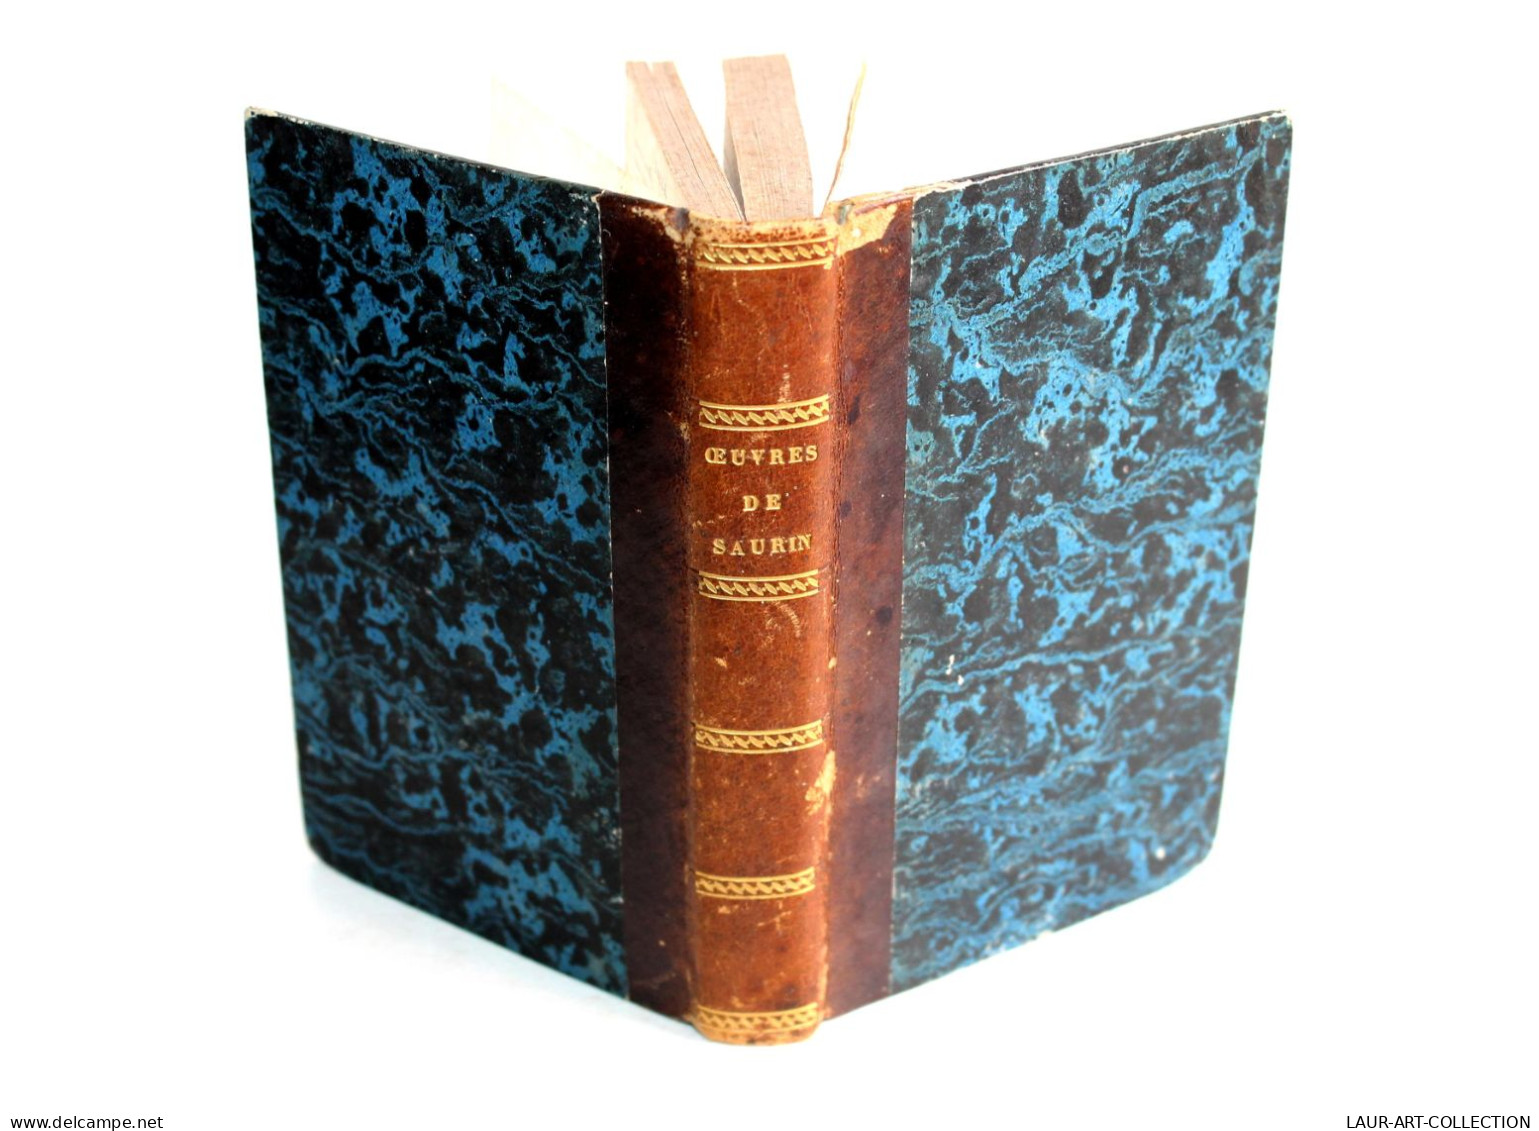 PIECE DE THEATRE OEUVRES CHOISIES DE SAURIN EDITION STEREOTYPE 1820 FIRMIN DIDOT / ANCIEN LIVRE XIXe SIECLE (1803.100) - Französische Autoren